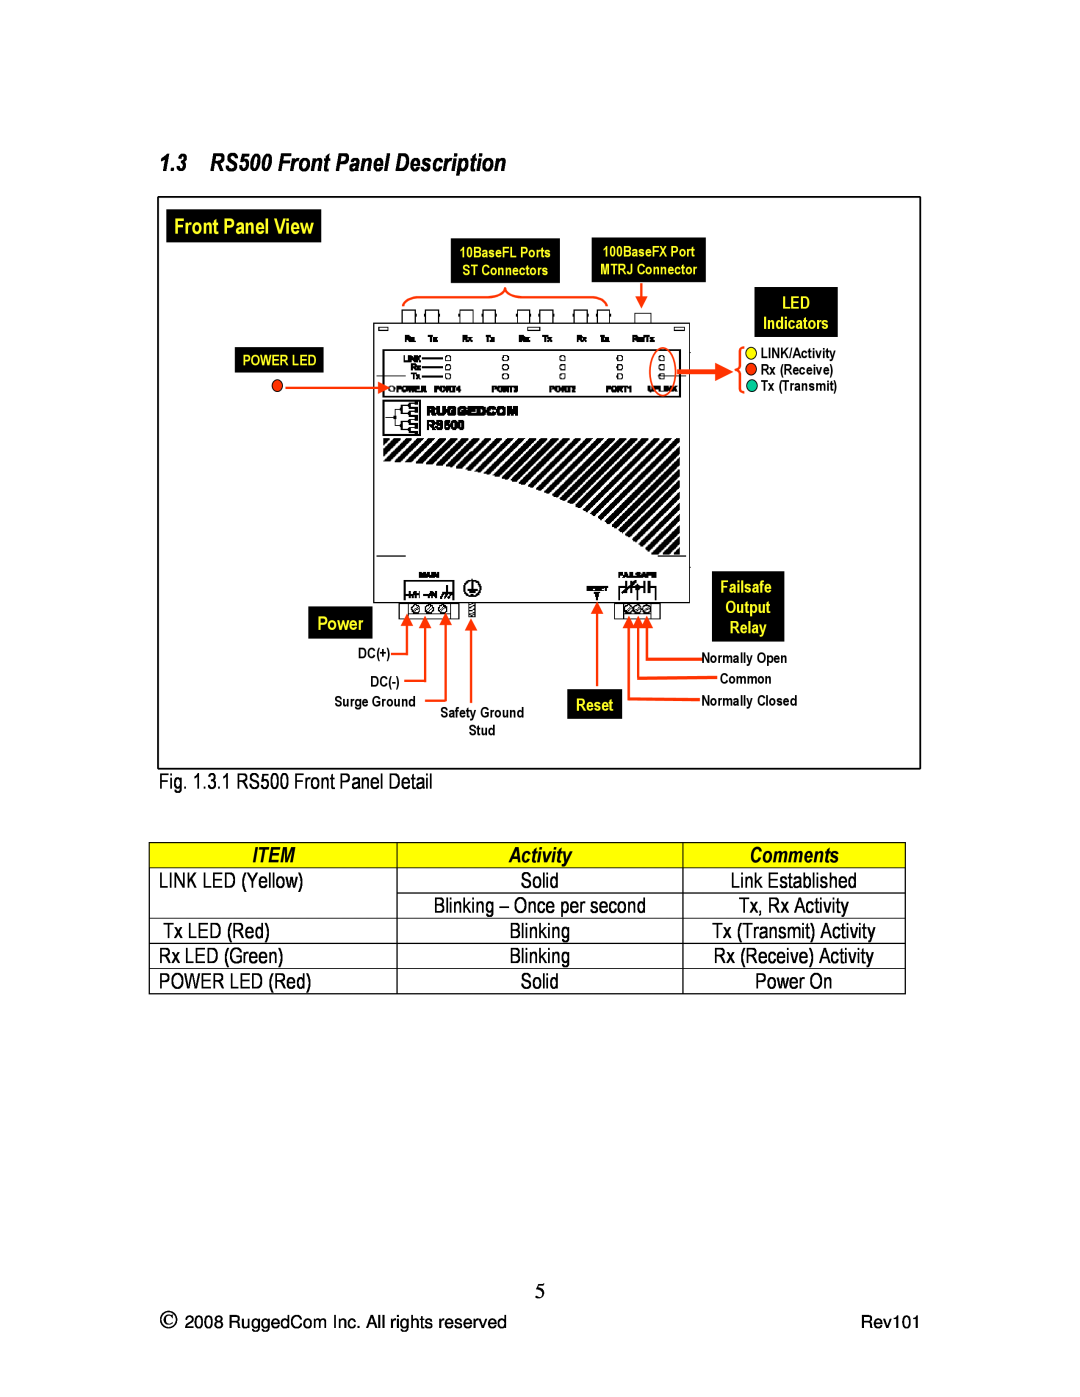 RuggedCom 1.3 RS500 Front Panel Description, Front Panel View, Power, LED Indicators, Failsafe Output Relay, Reset 